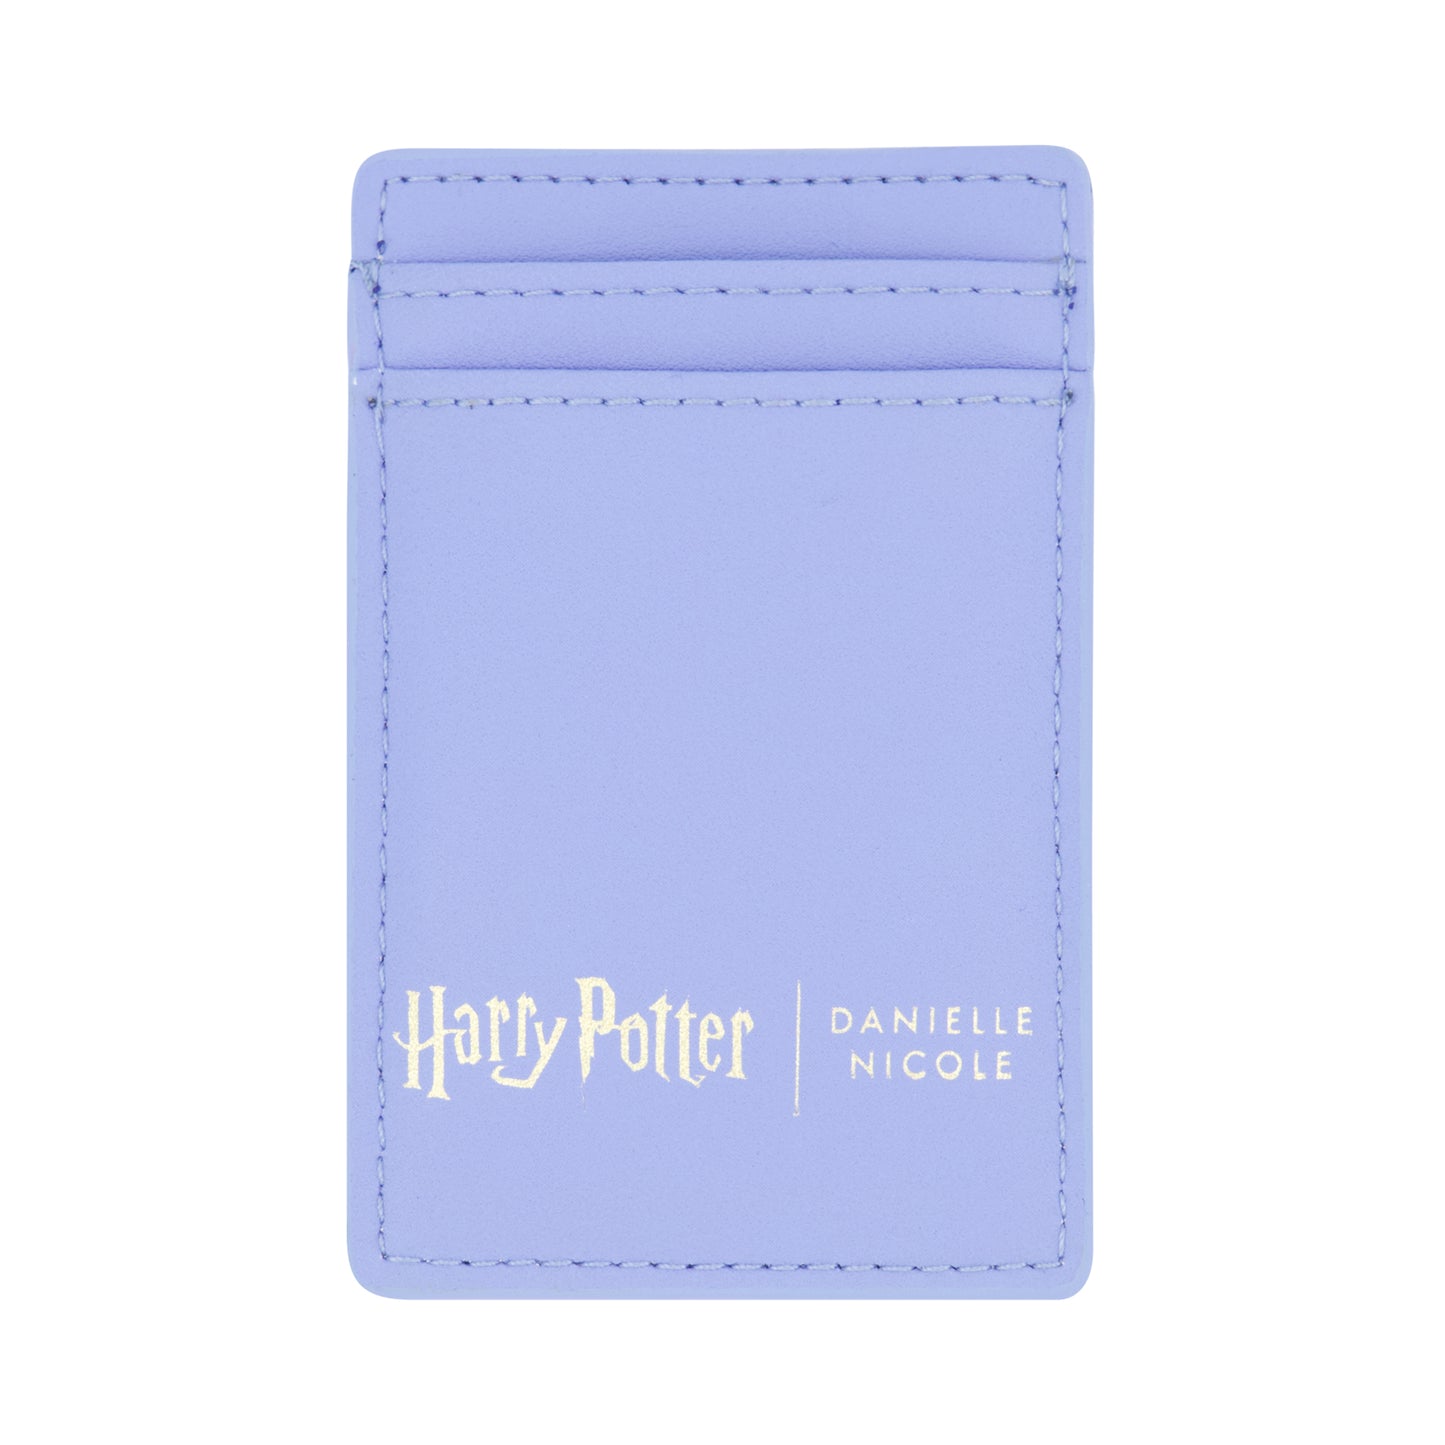 Danielle Nicole Harry Potter Quidditch card holder